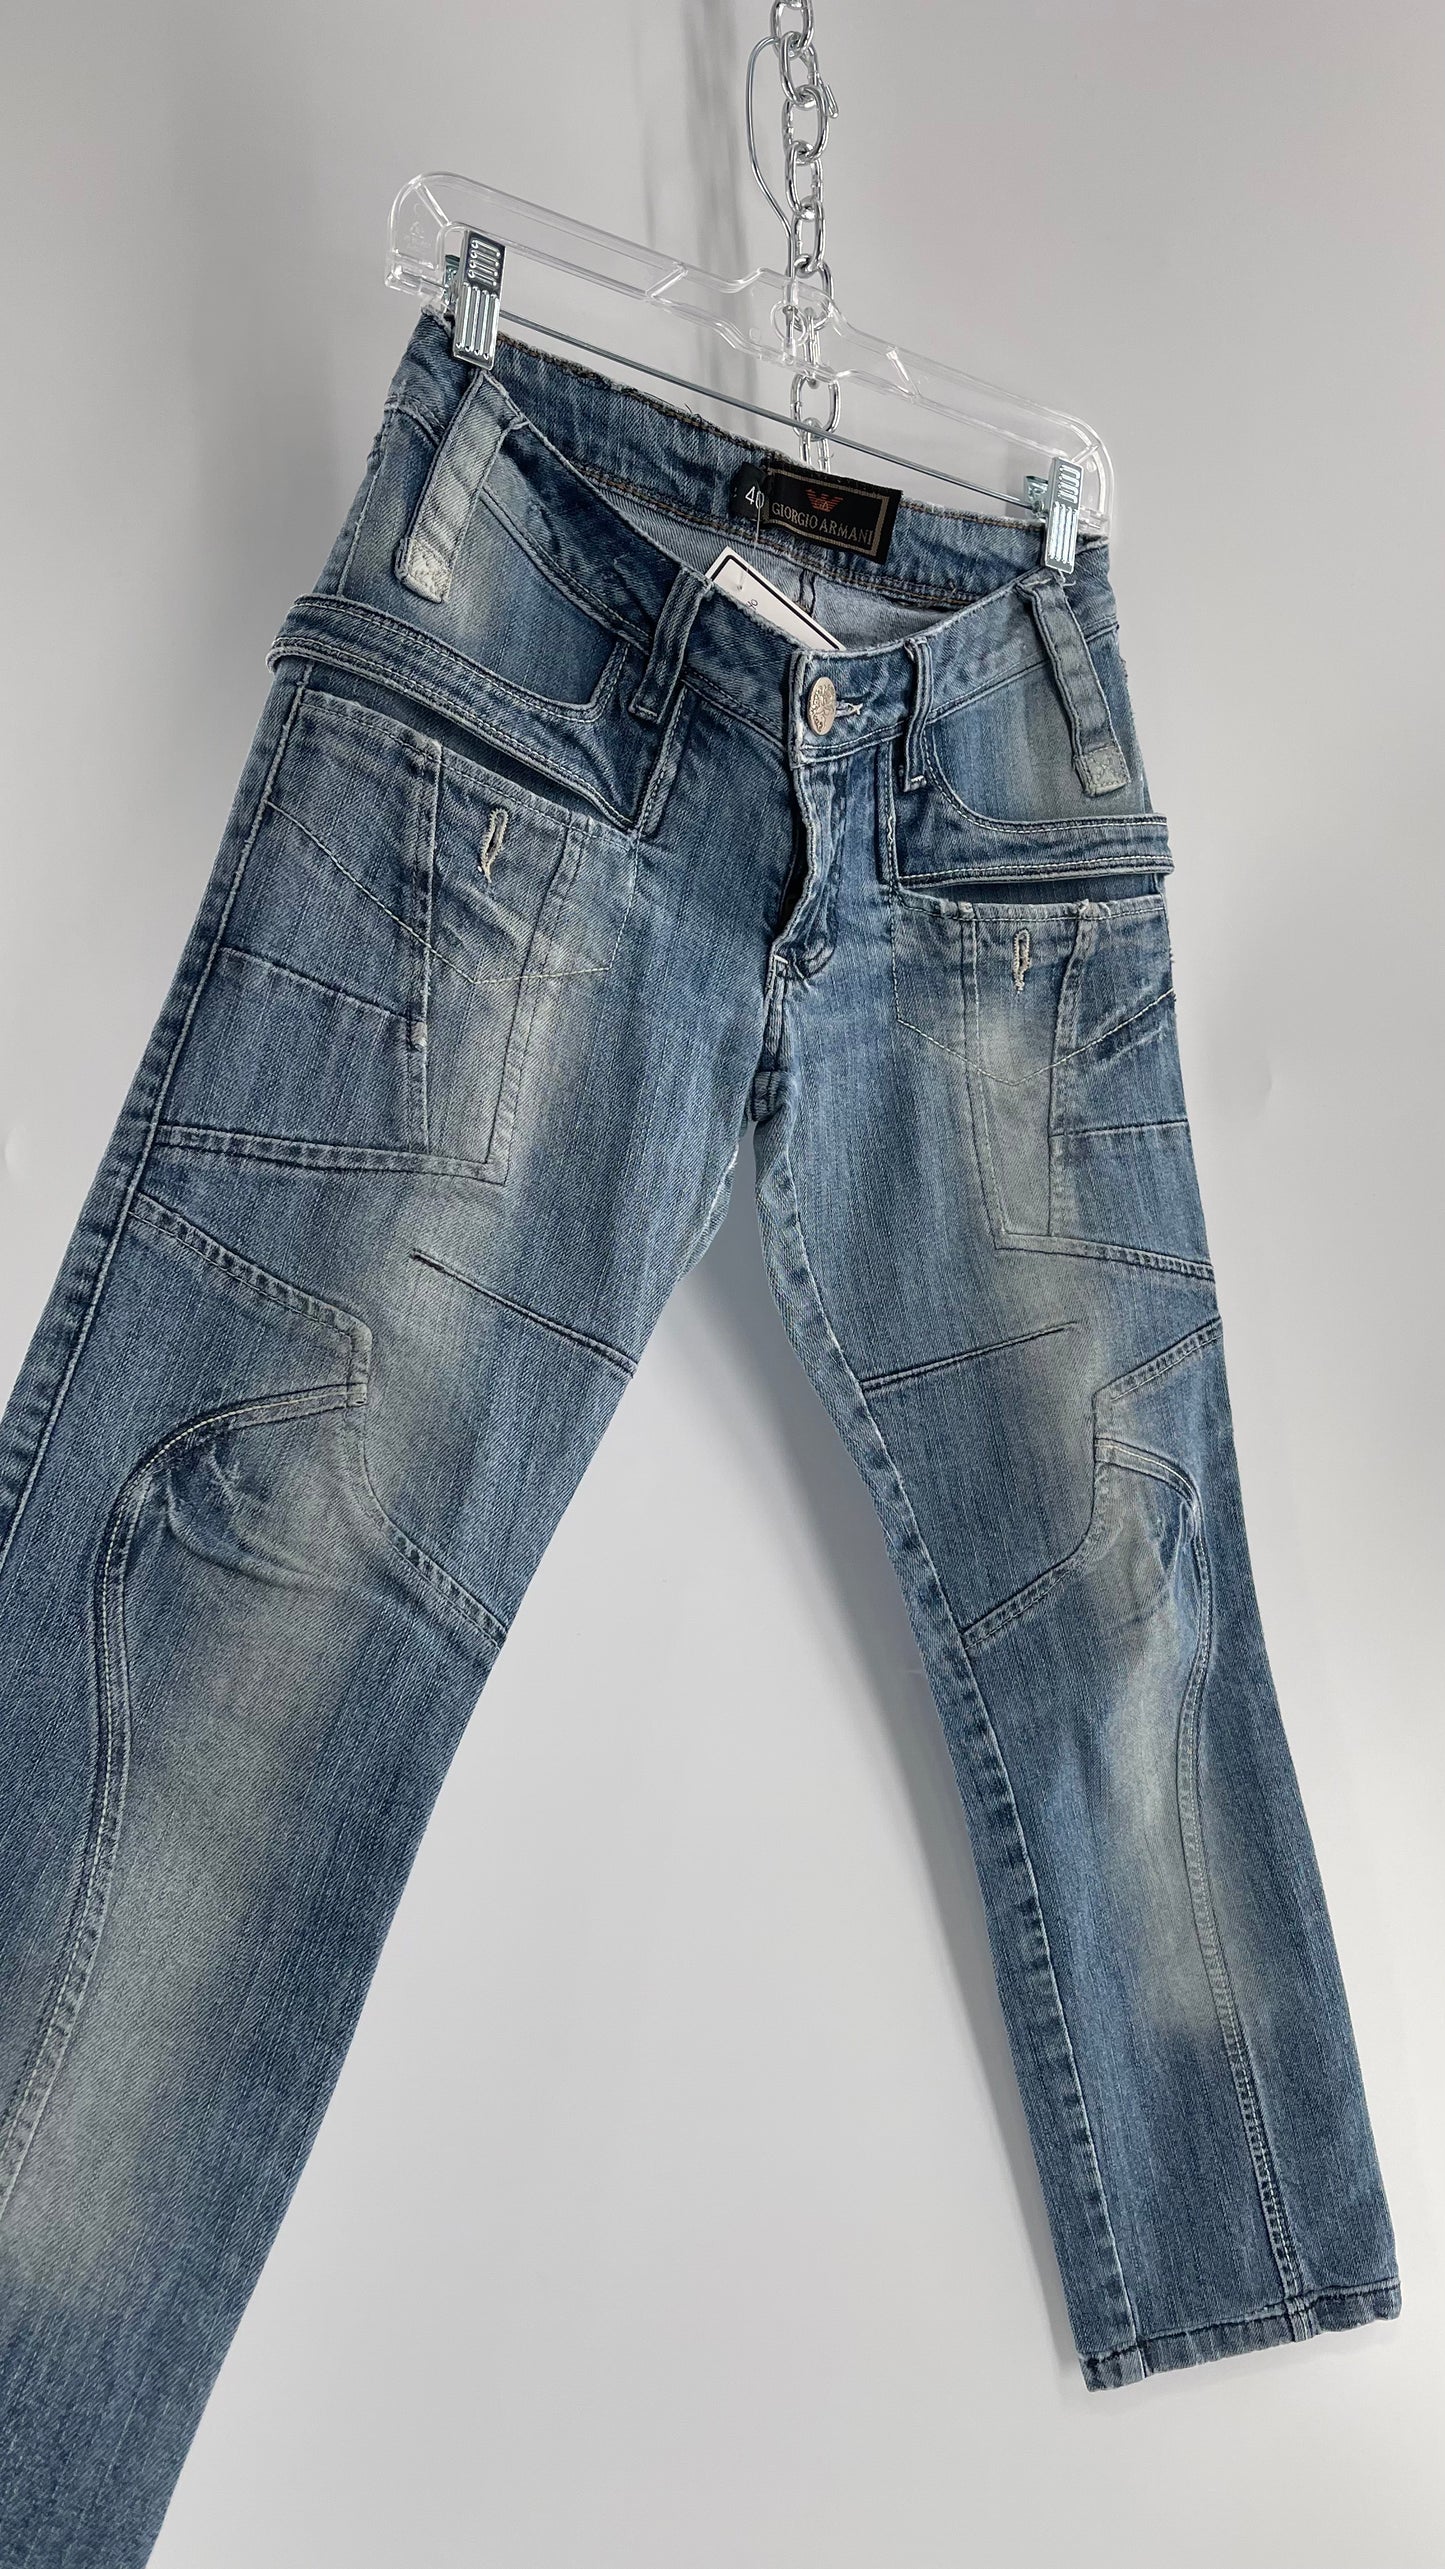 Giorgio Armani Jeans Abstract Seams Light Wash Skinnies (40)